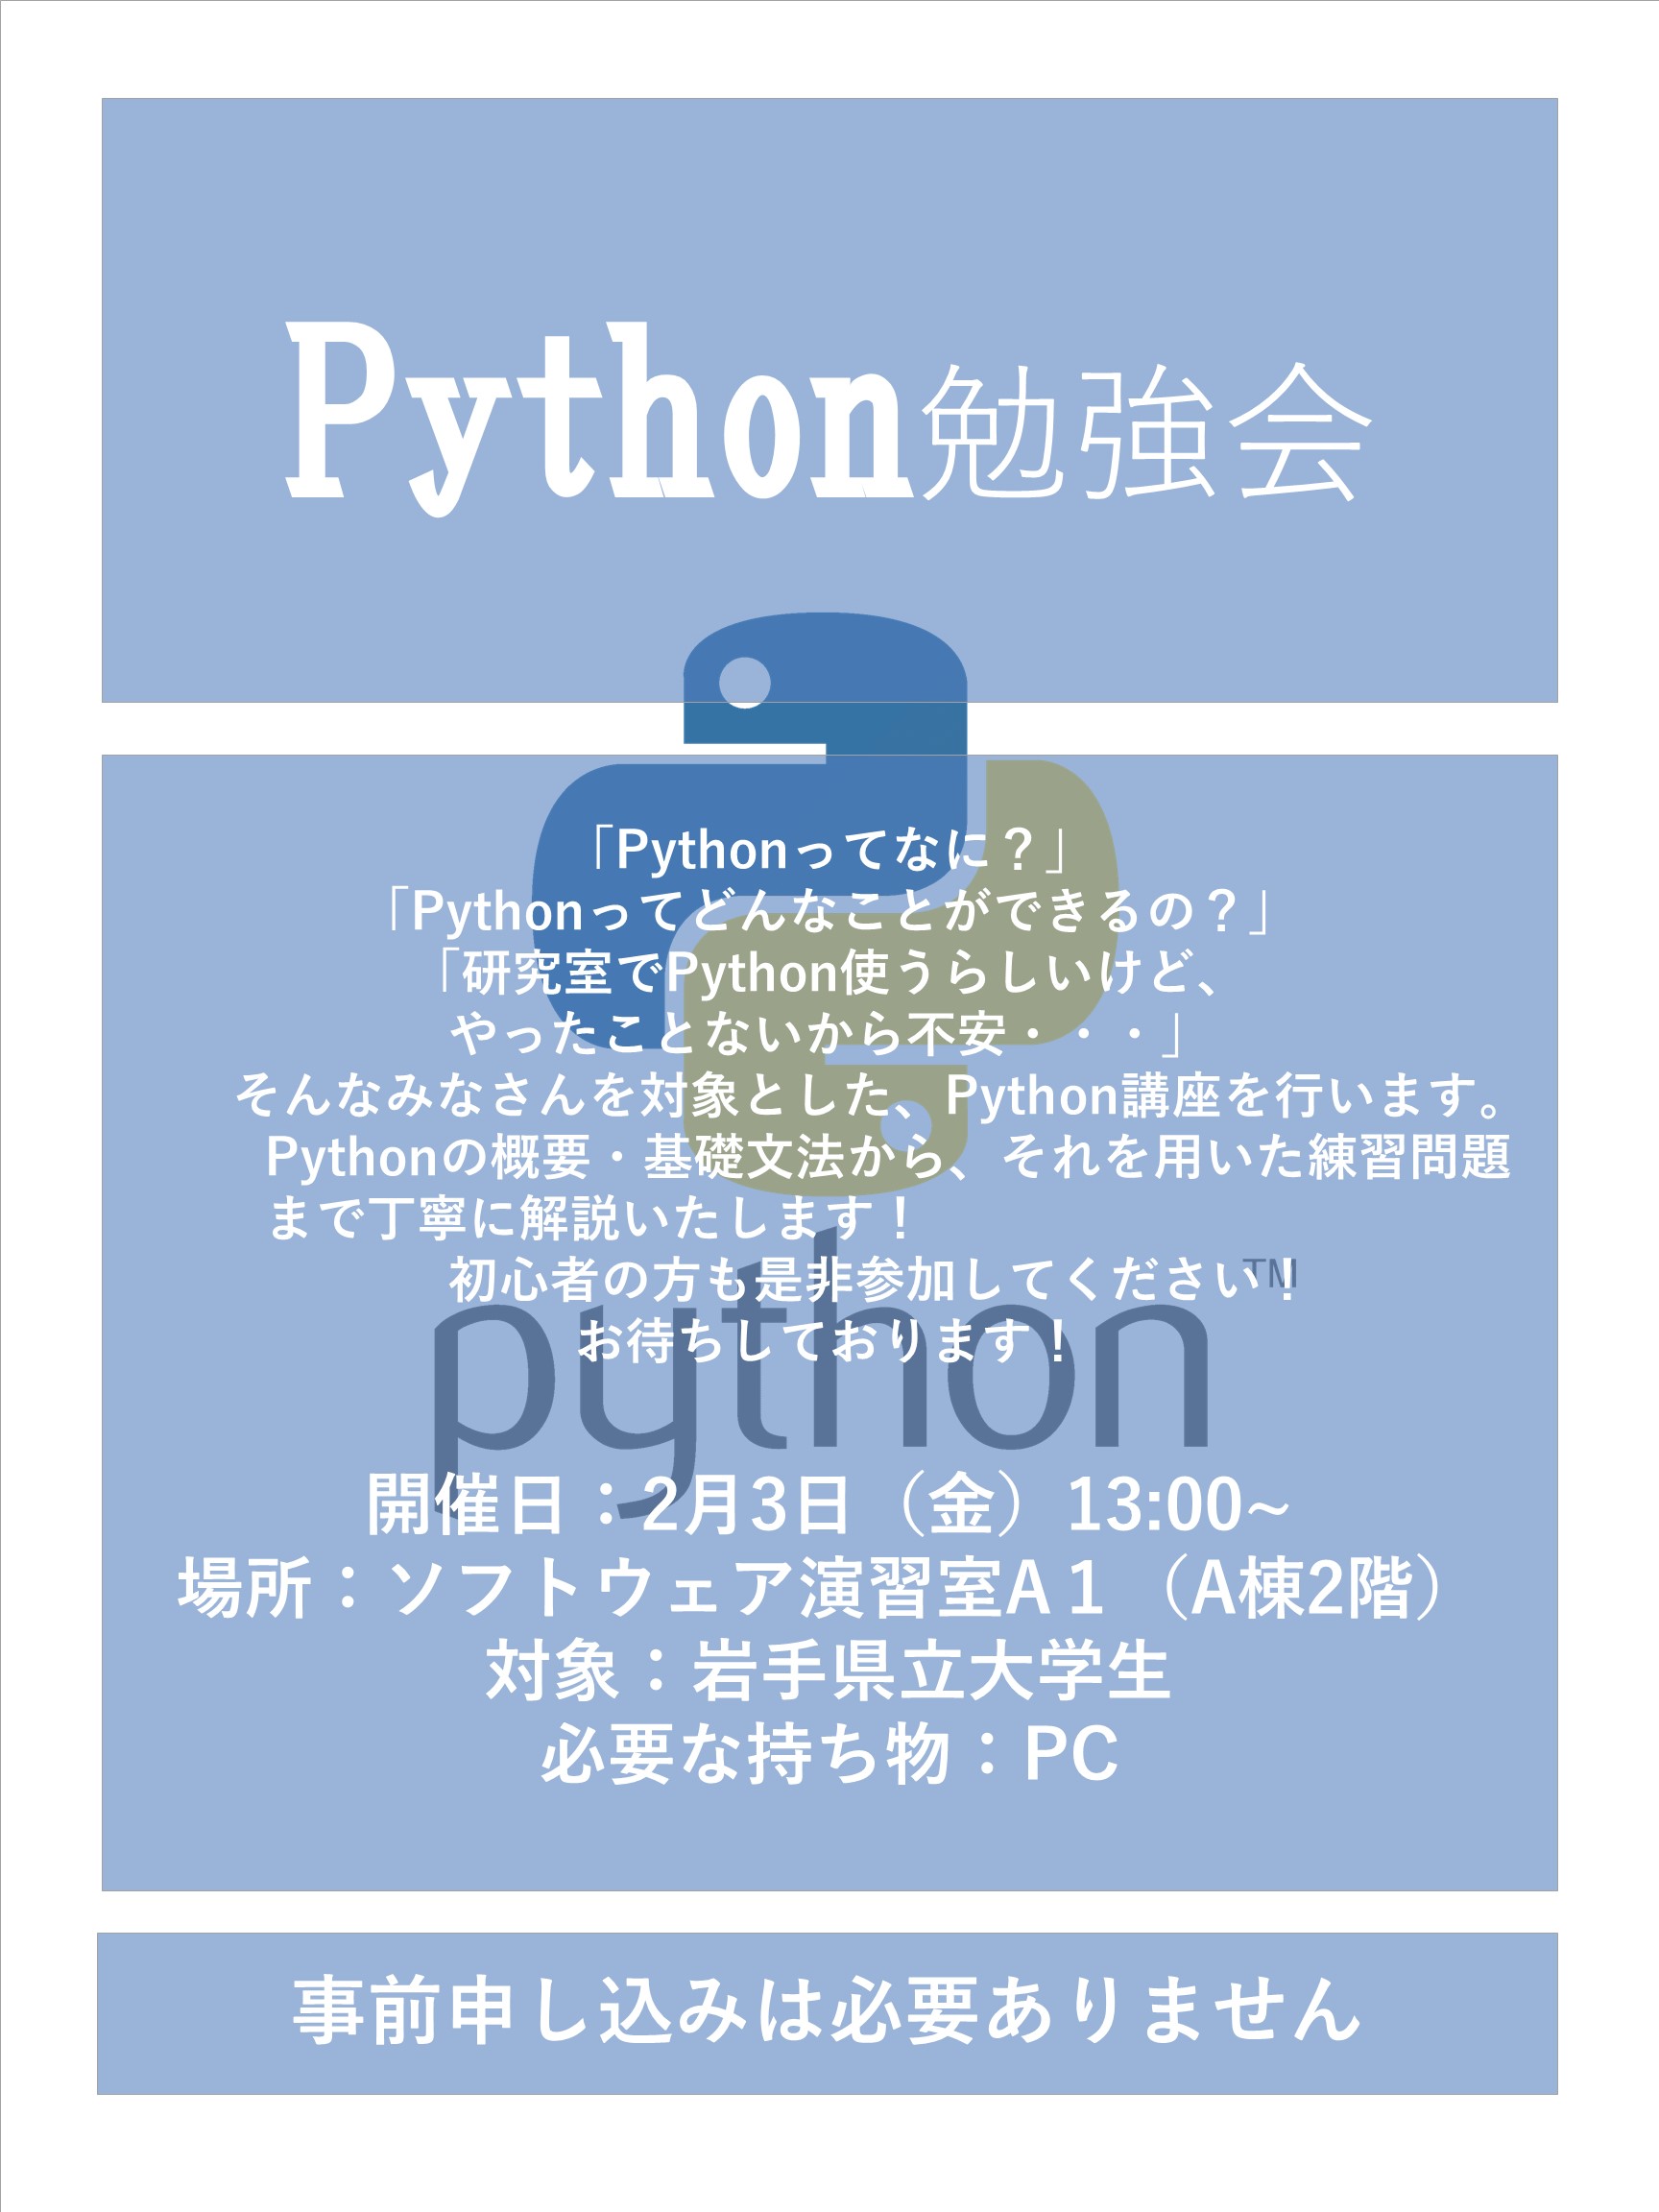 Python勉強会のお知らせ